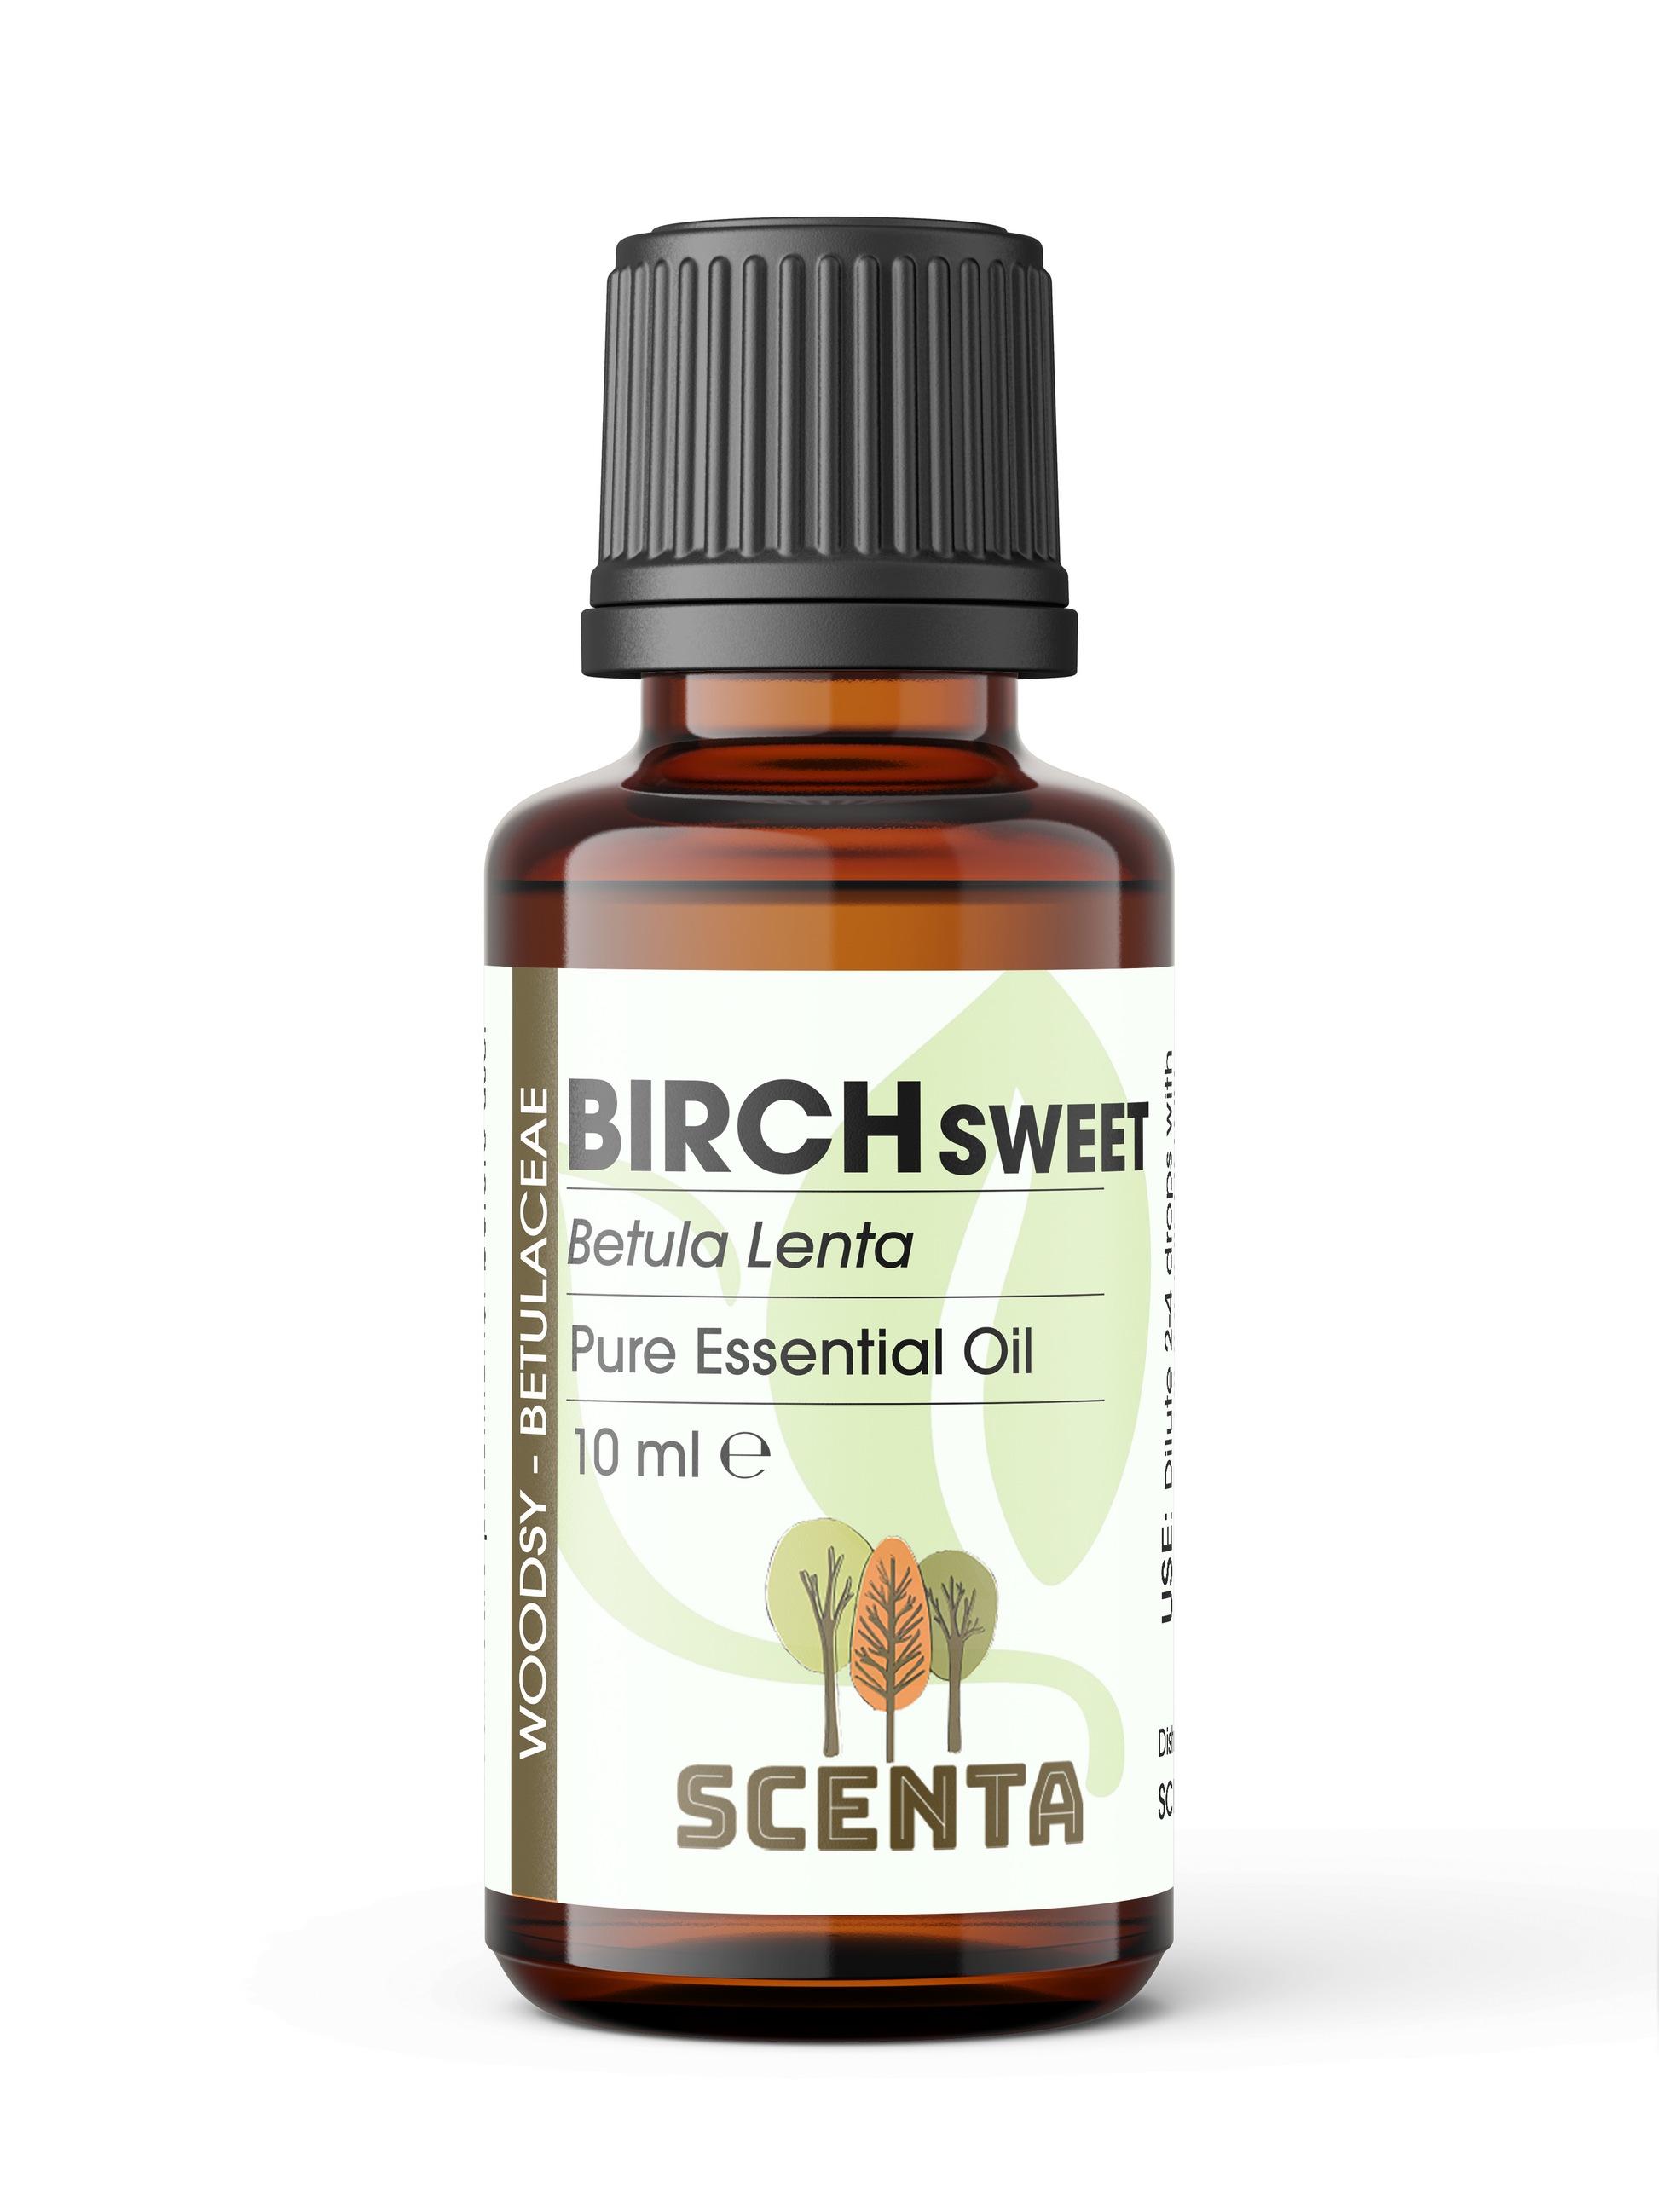 birch sweet essential oil